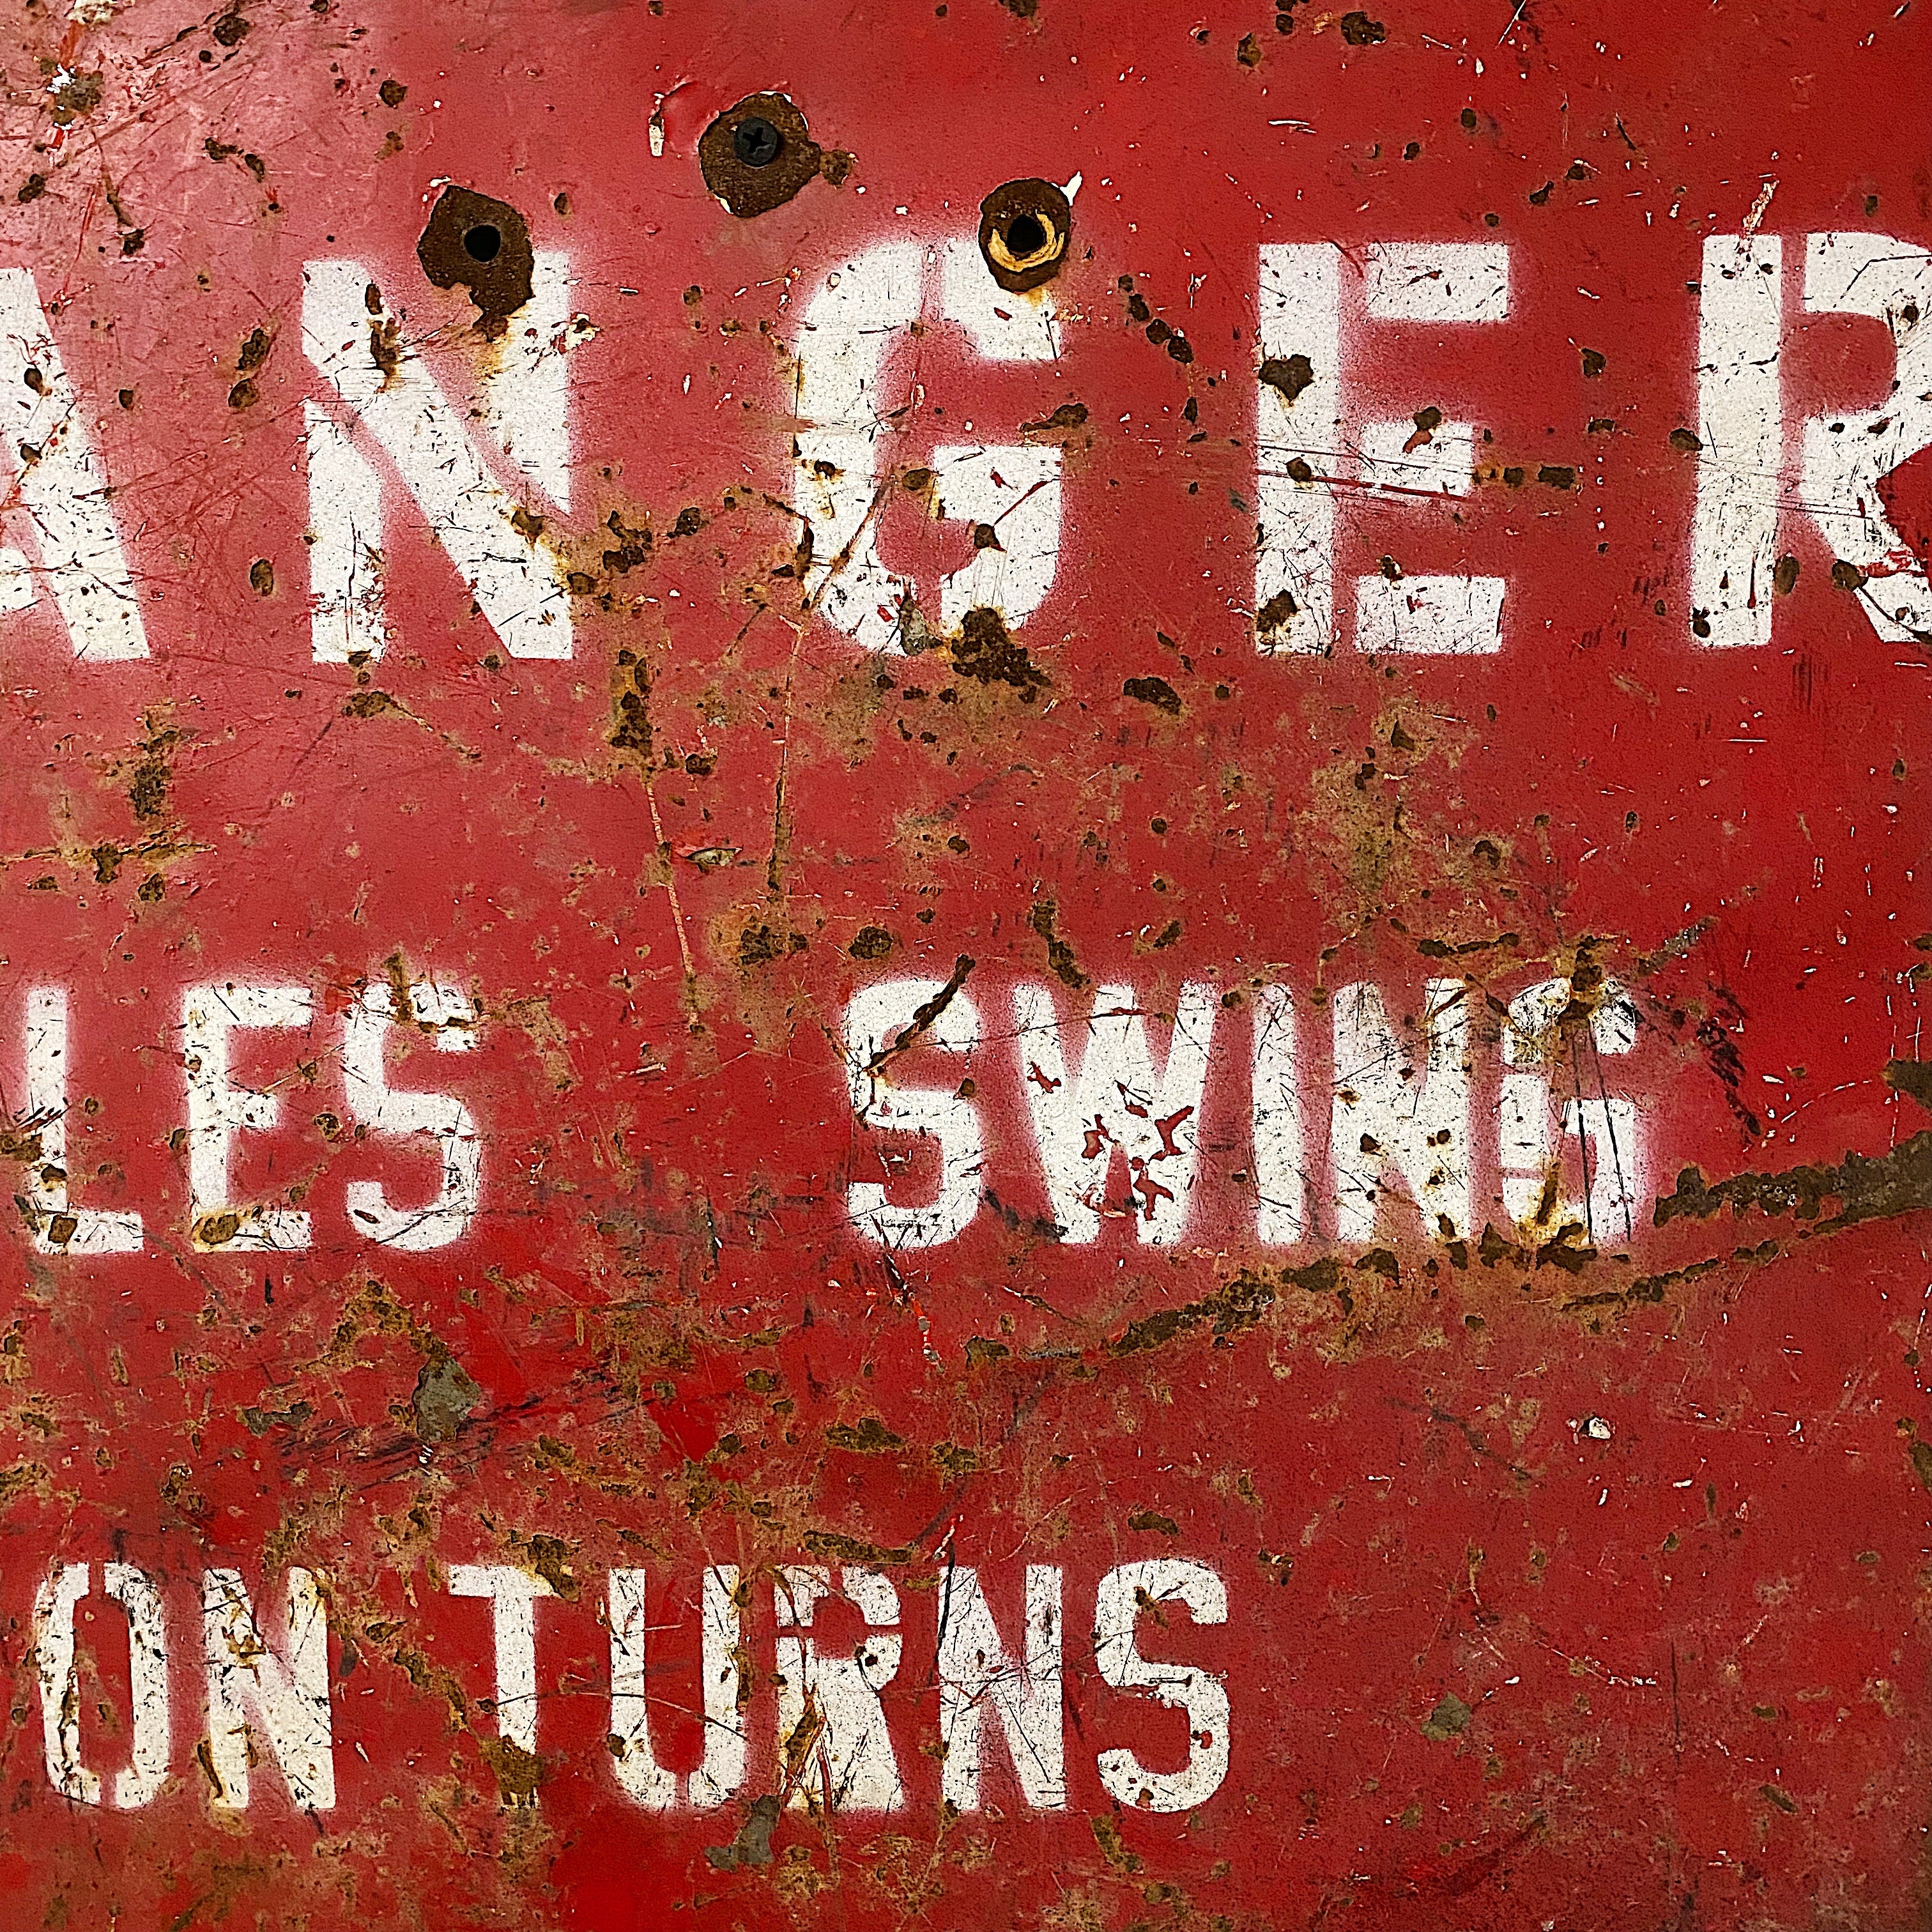 Vintage Danger Metal Sign from 1950s | Chicago History